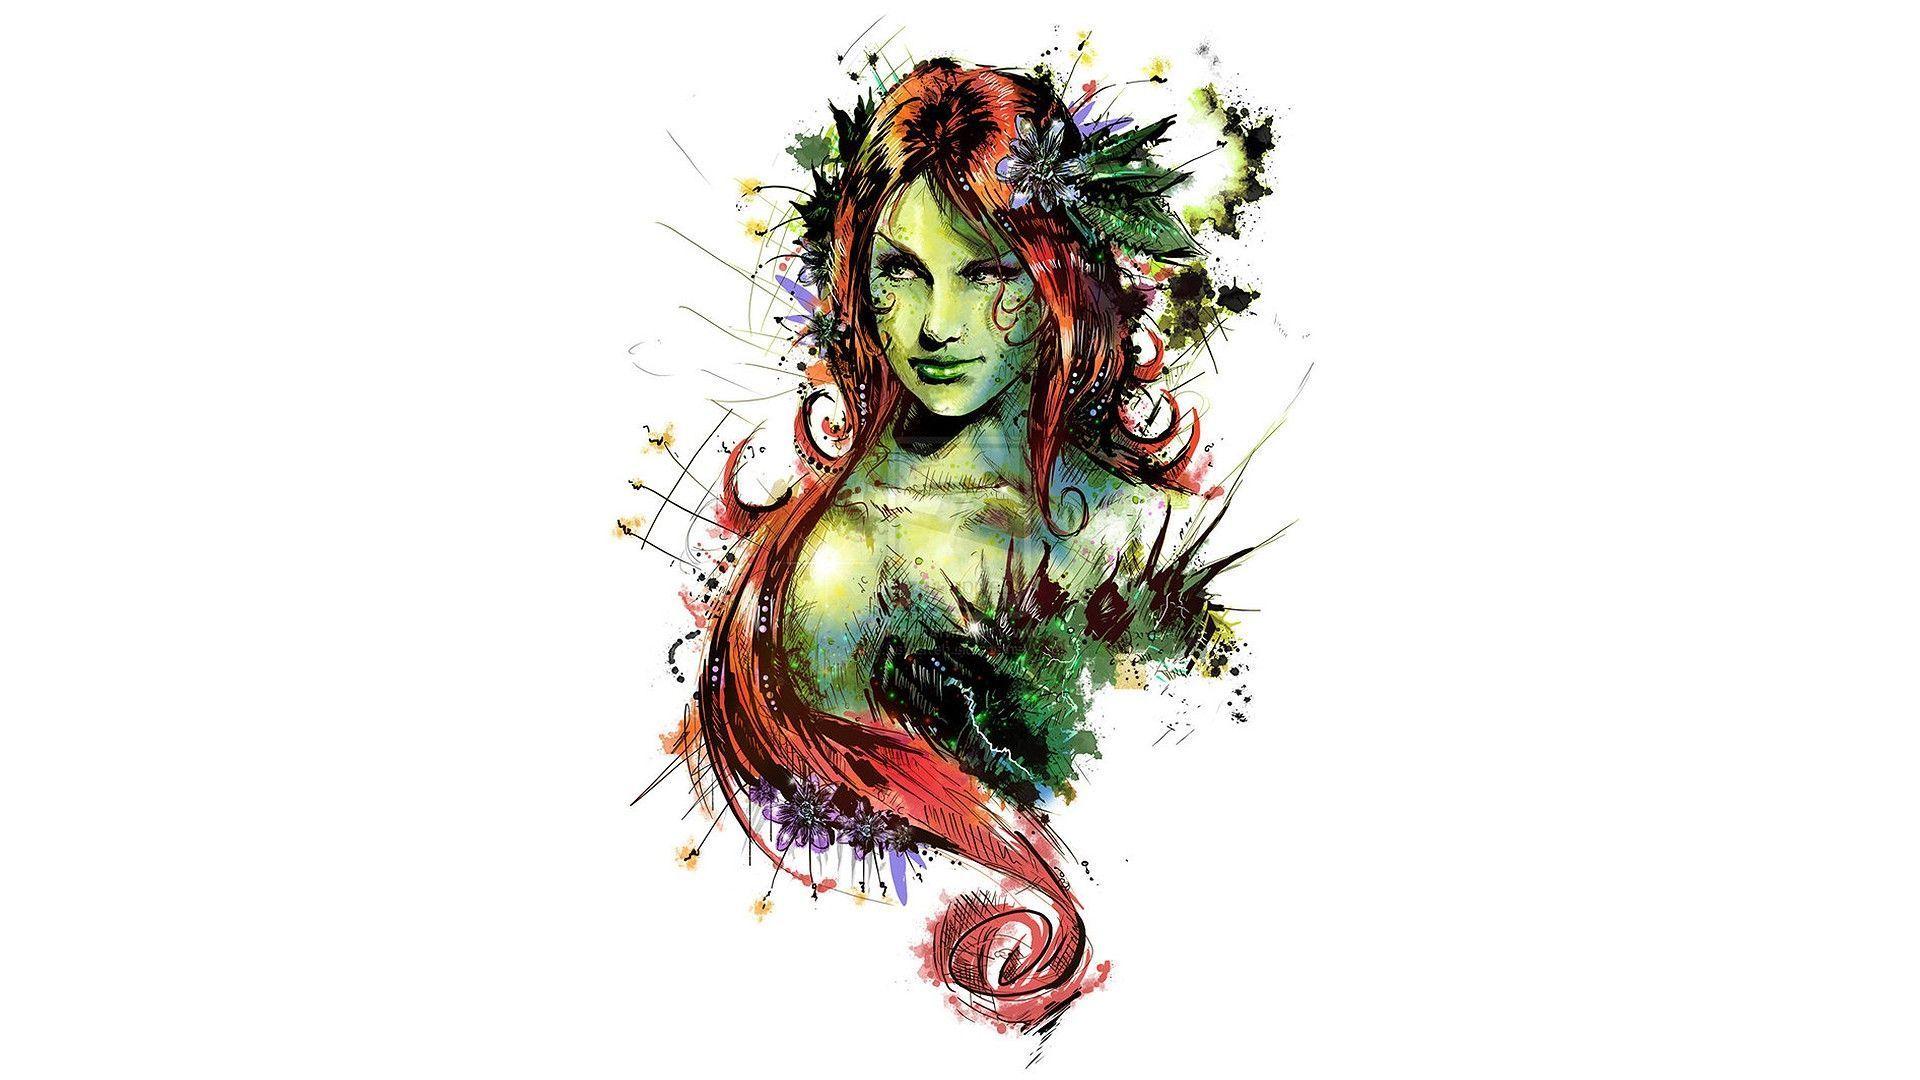 V.78: Poison Ivy Wallpaper, HD Image of Poison Ivy, Ultra HD 4K